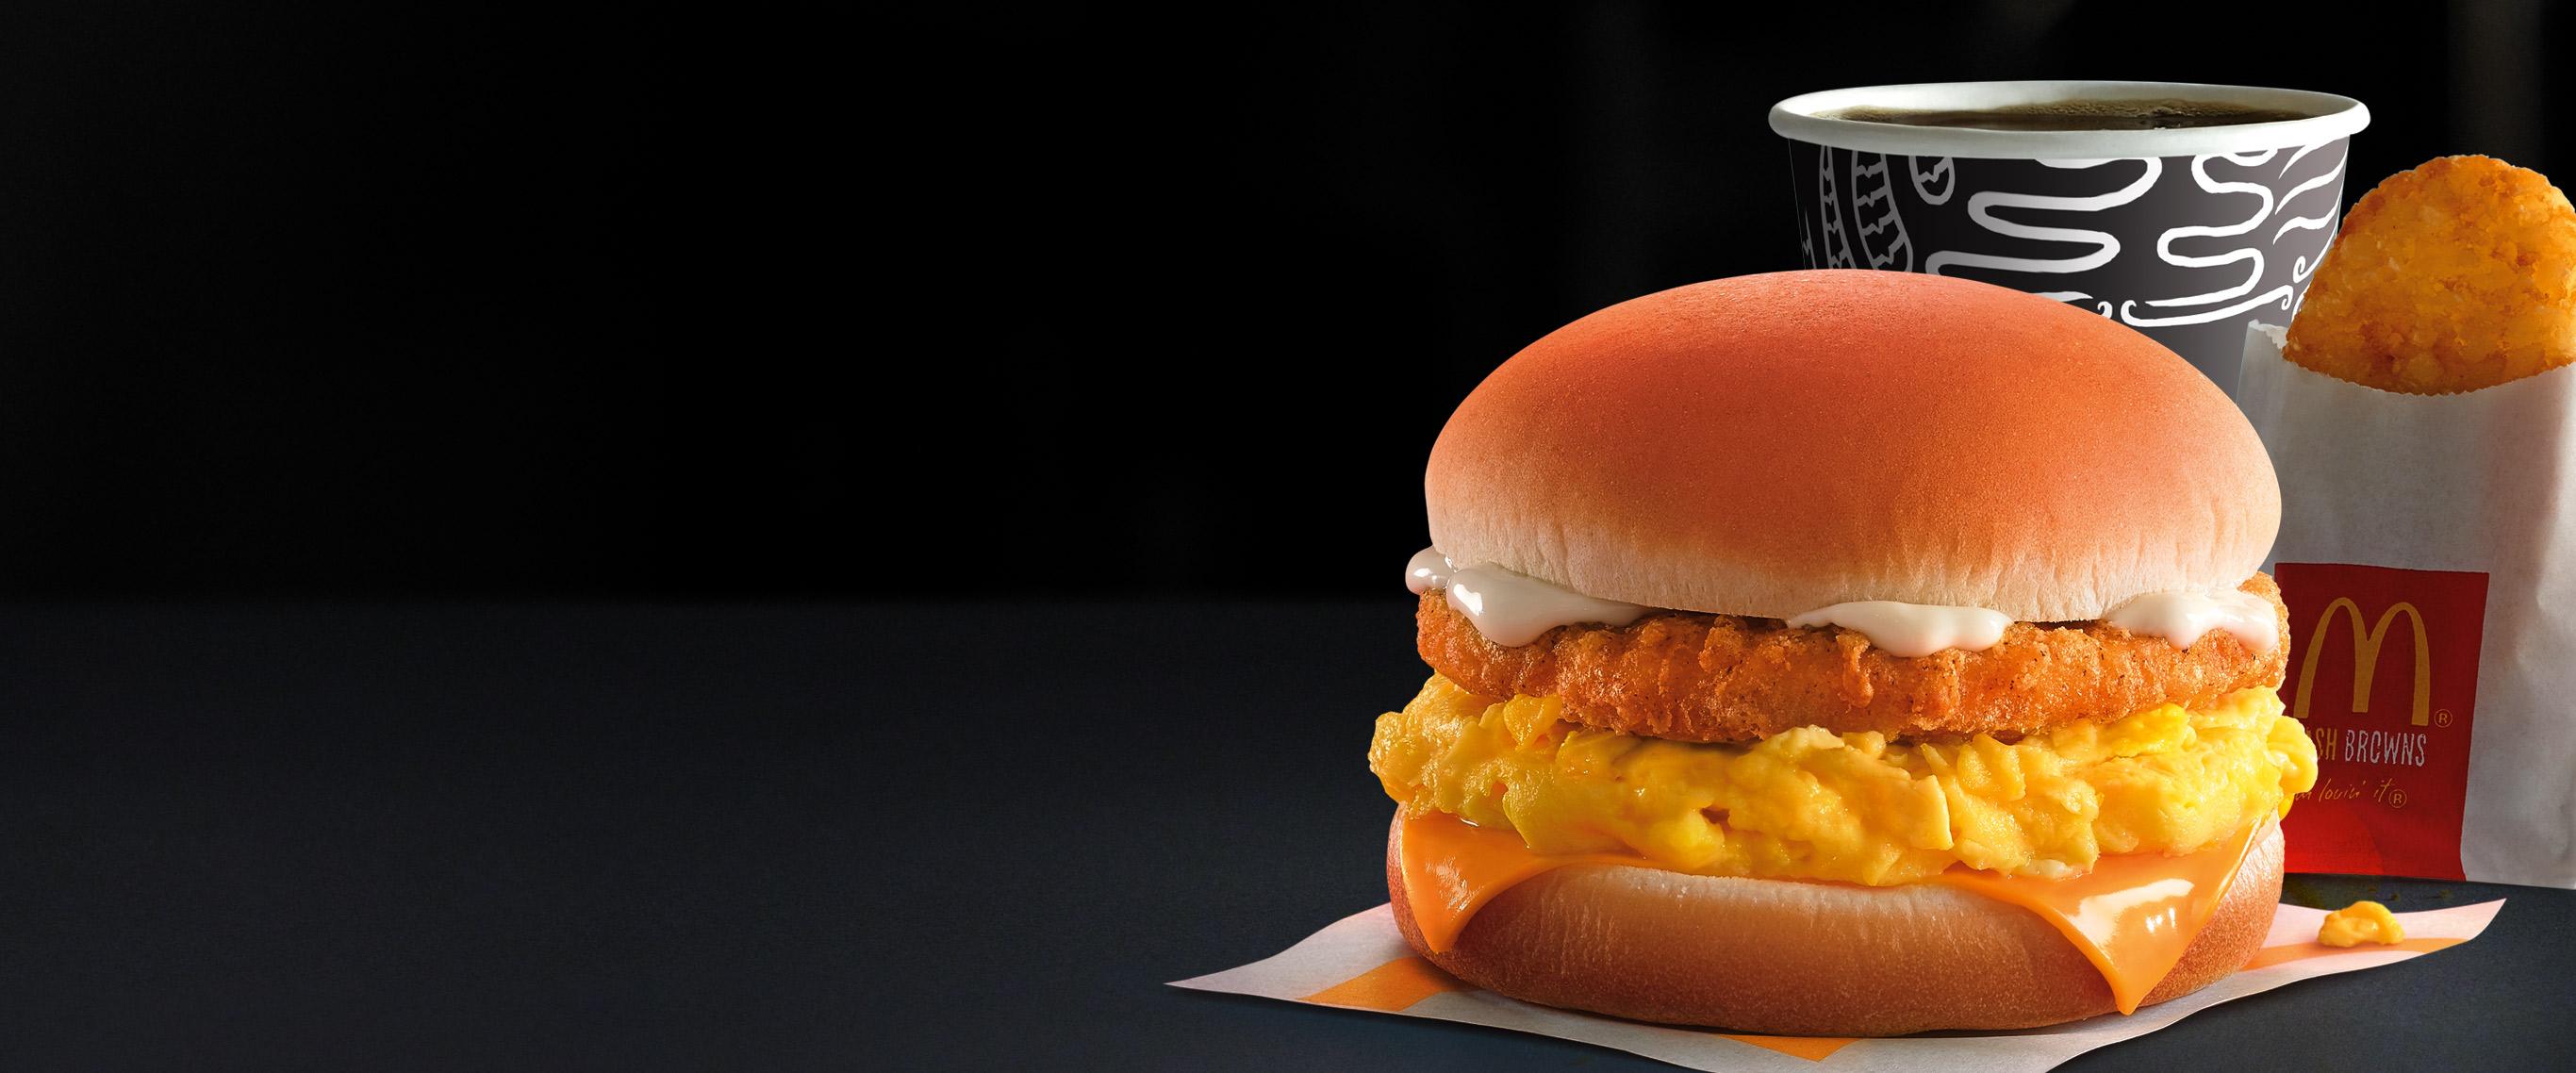 Crispy Chicken & Scrambled Egg Sandwich | I'm lovin' it! McDonald's